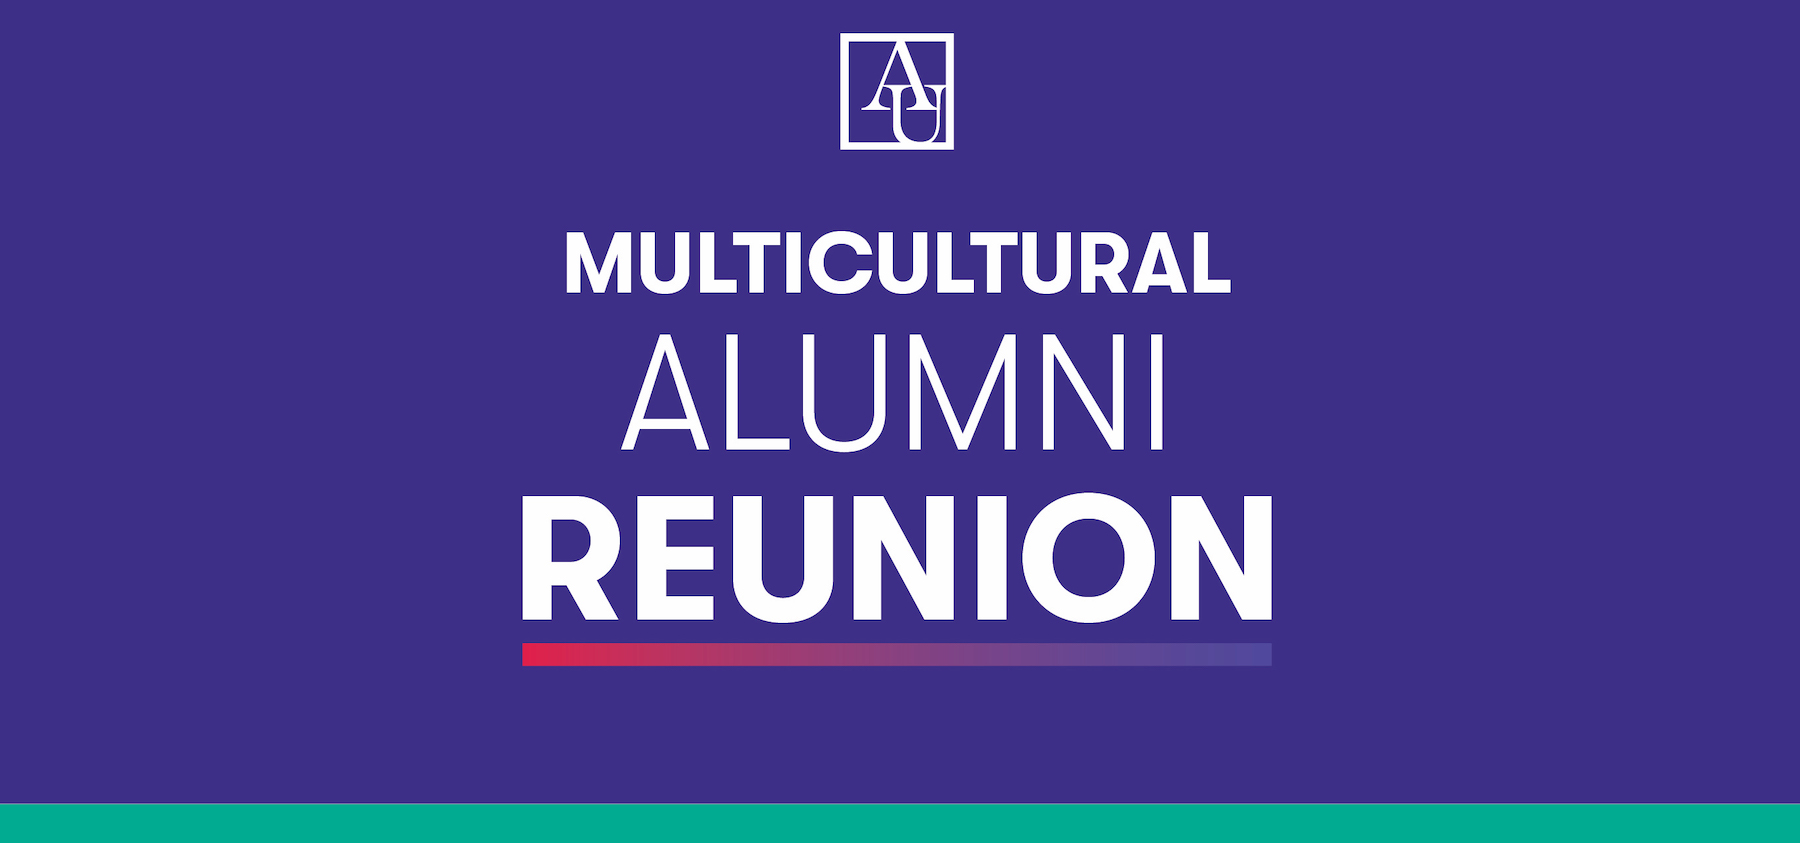 Multicultural Alumni Reunion